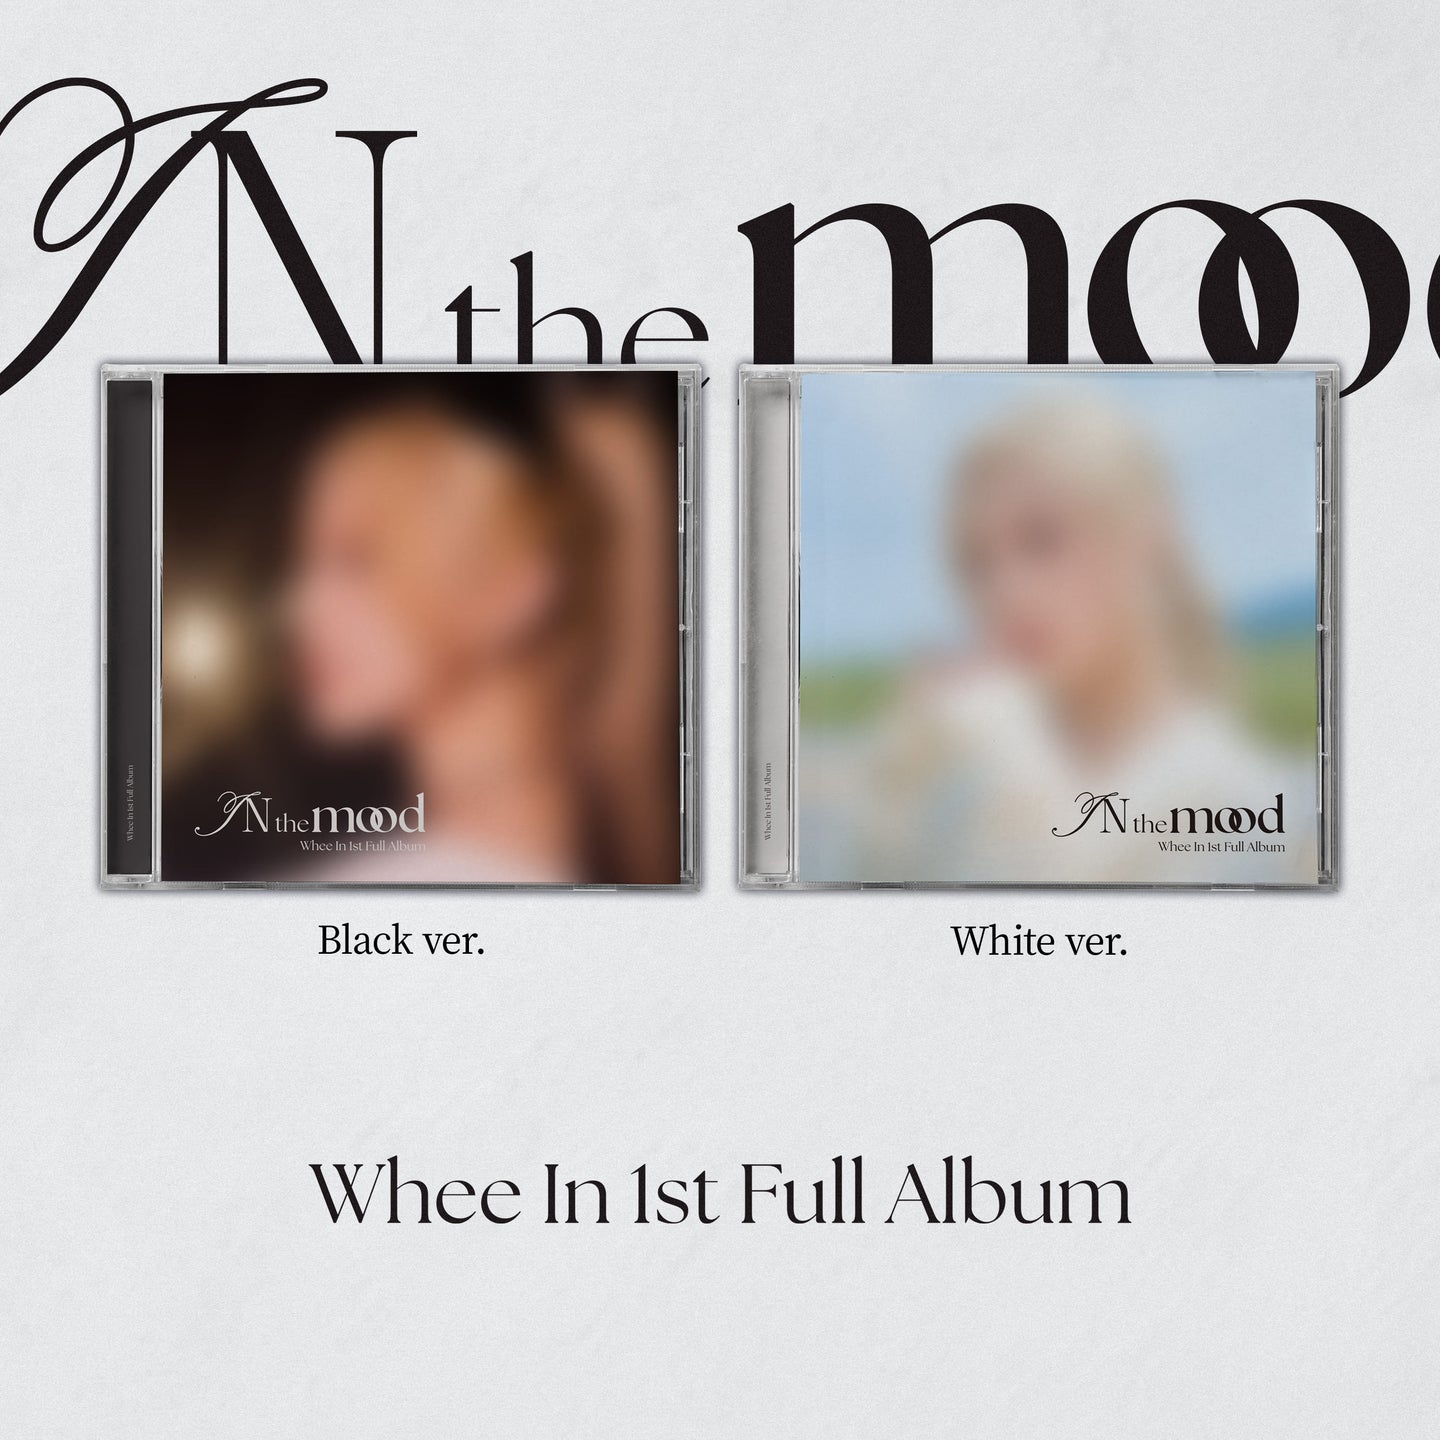 Whee In 1st Full Album – IN the mood (Jewel Ver.) (Random)